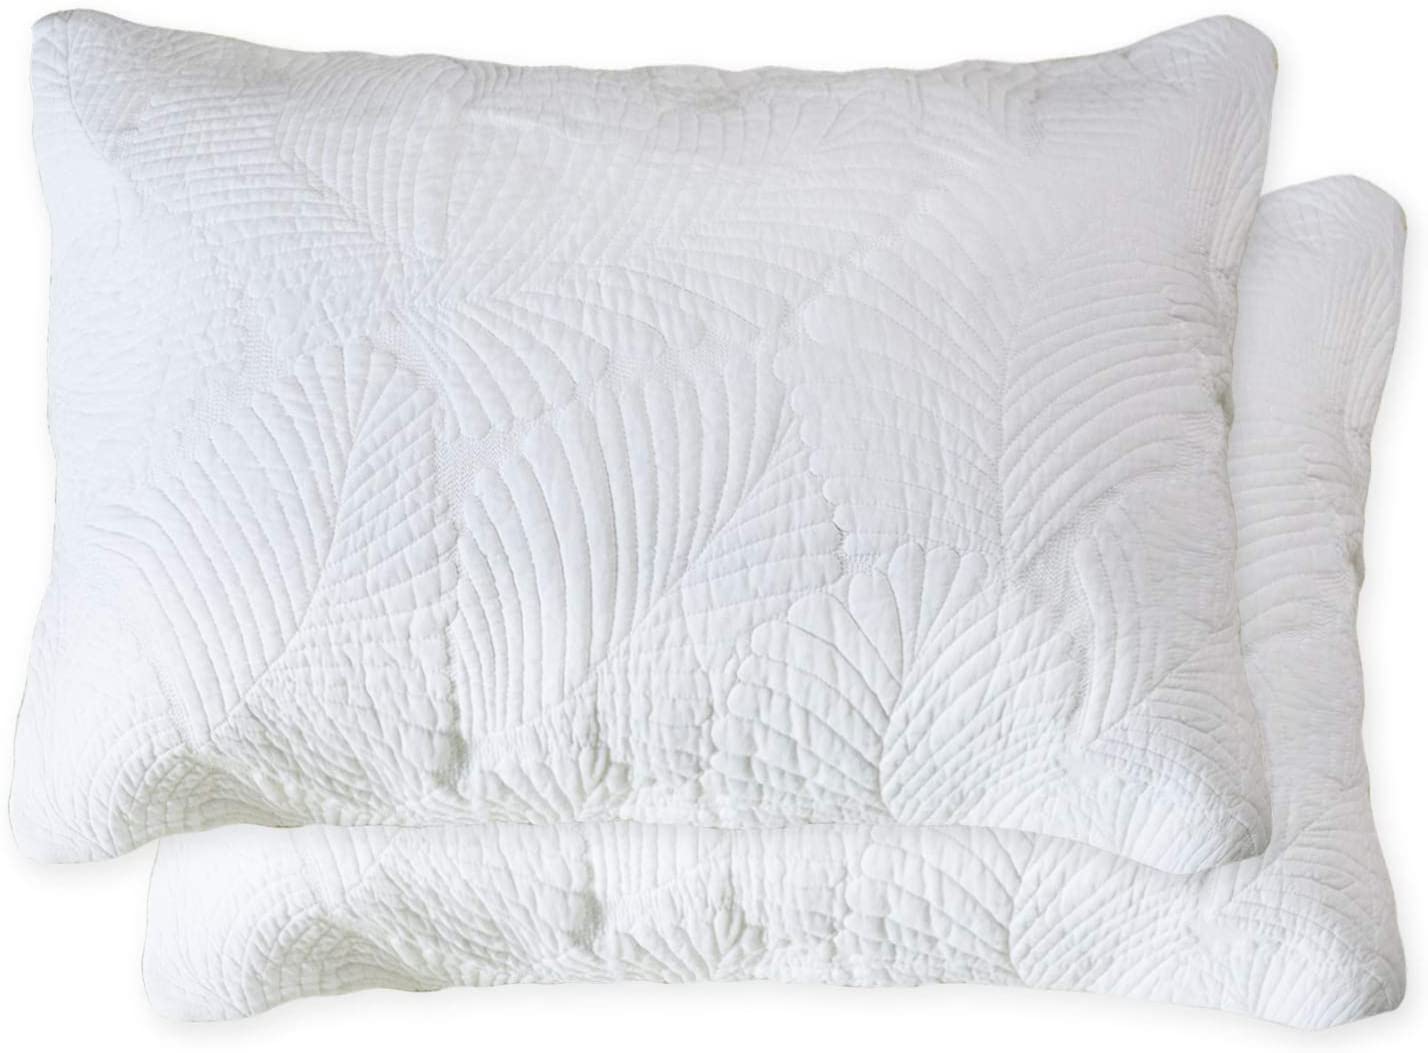 Details about   Brandream Quilted Pillow Shams Standard Size 100% Cotton Beige Medallion Decorat 